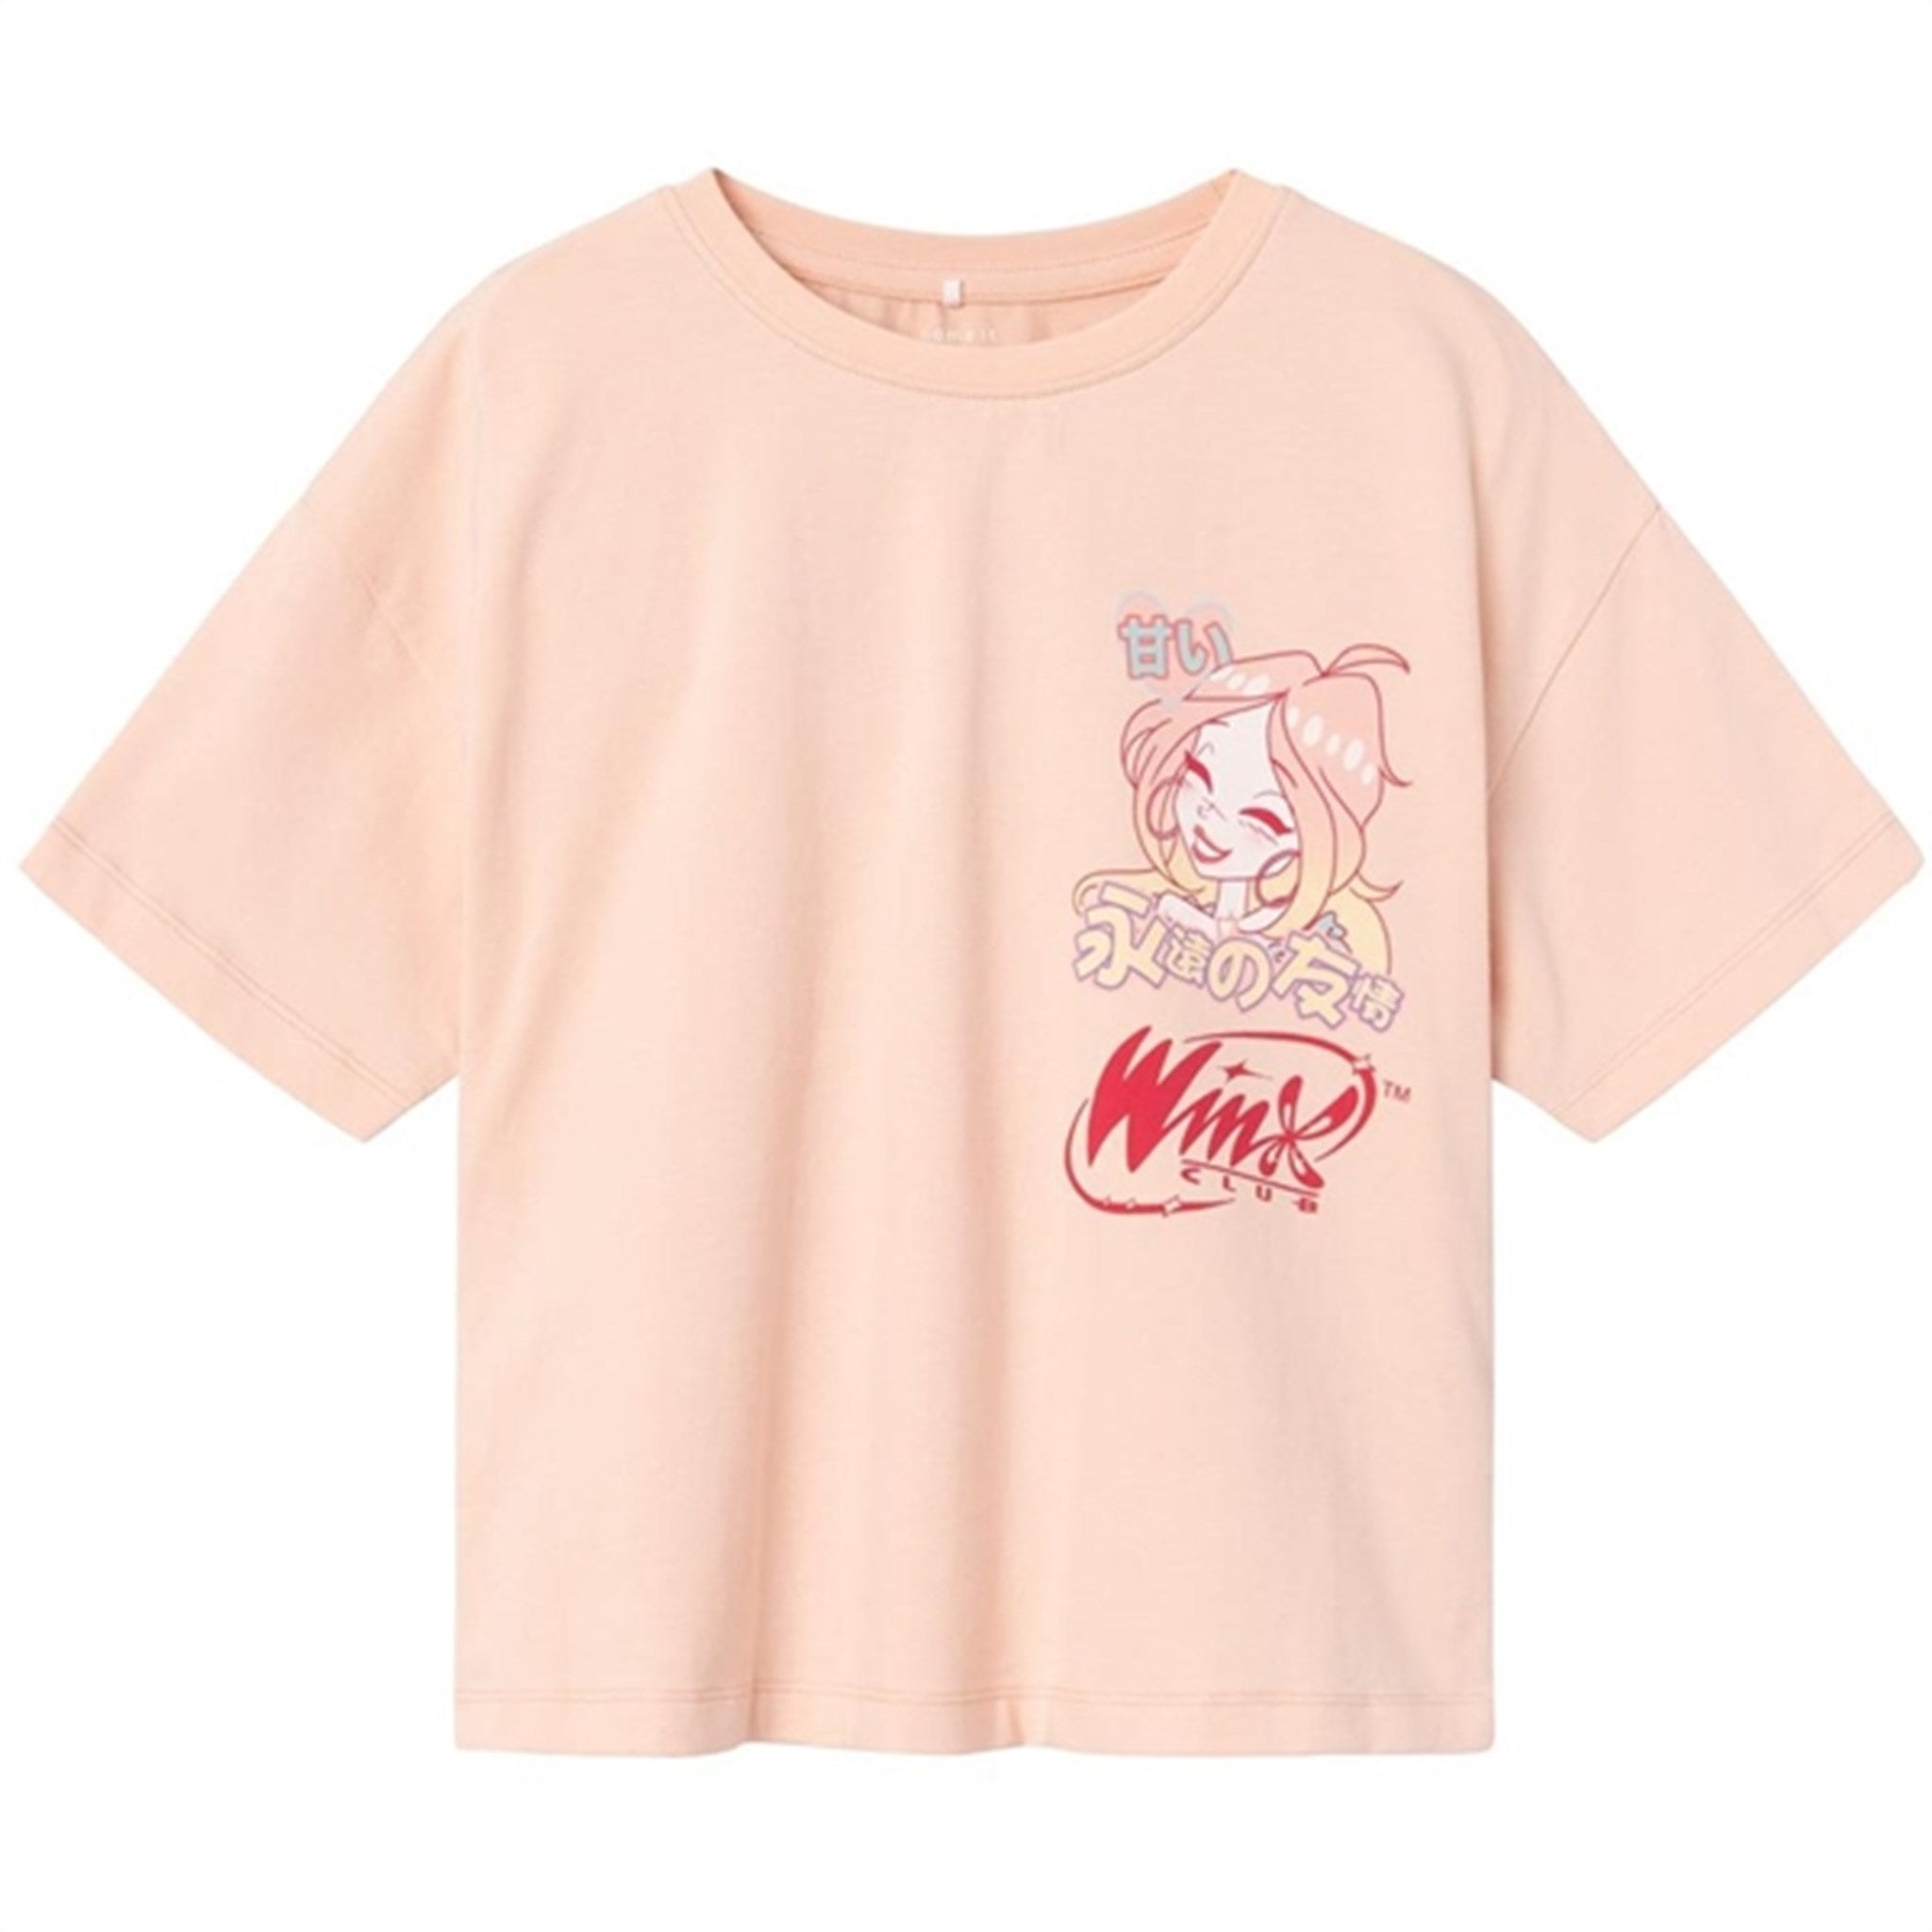 Name it Peachy Keen Faxana Winx T-Shirt